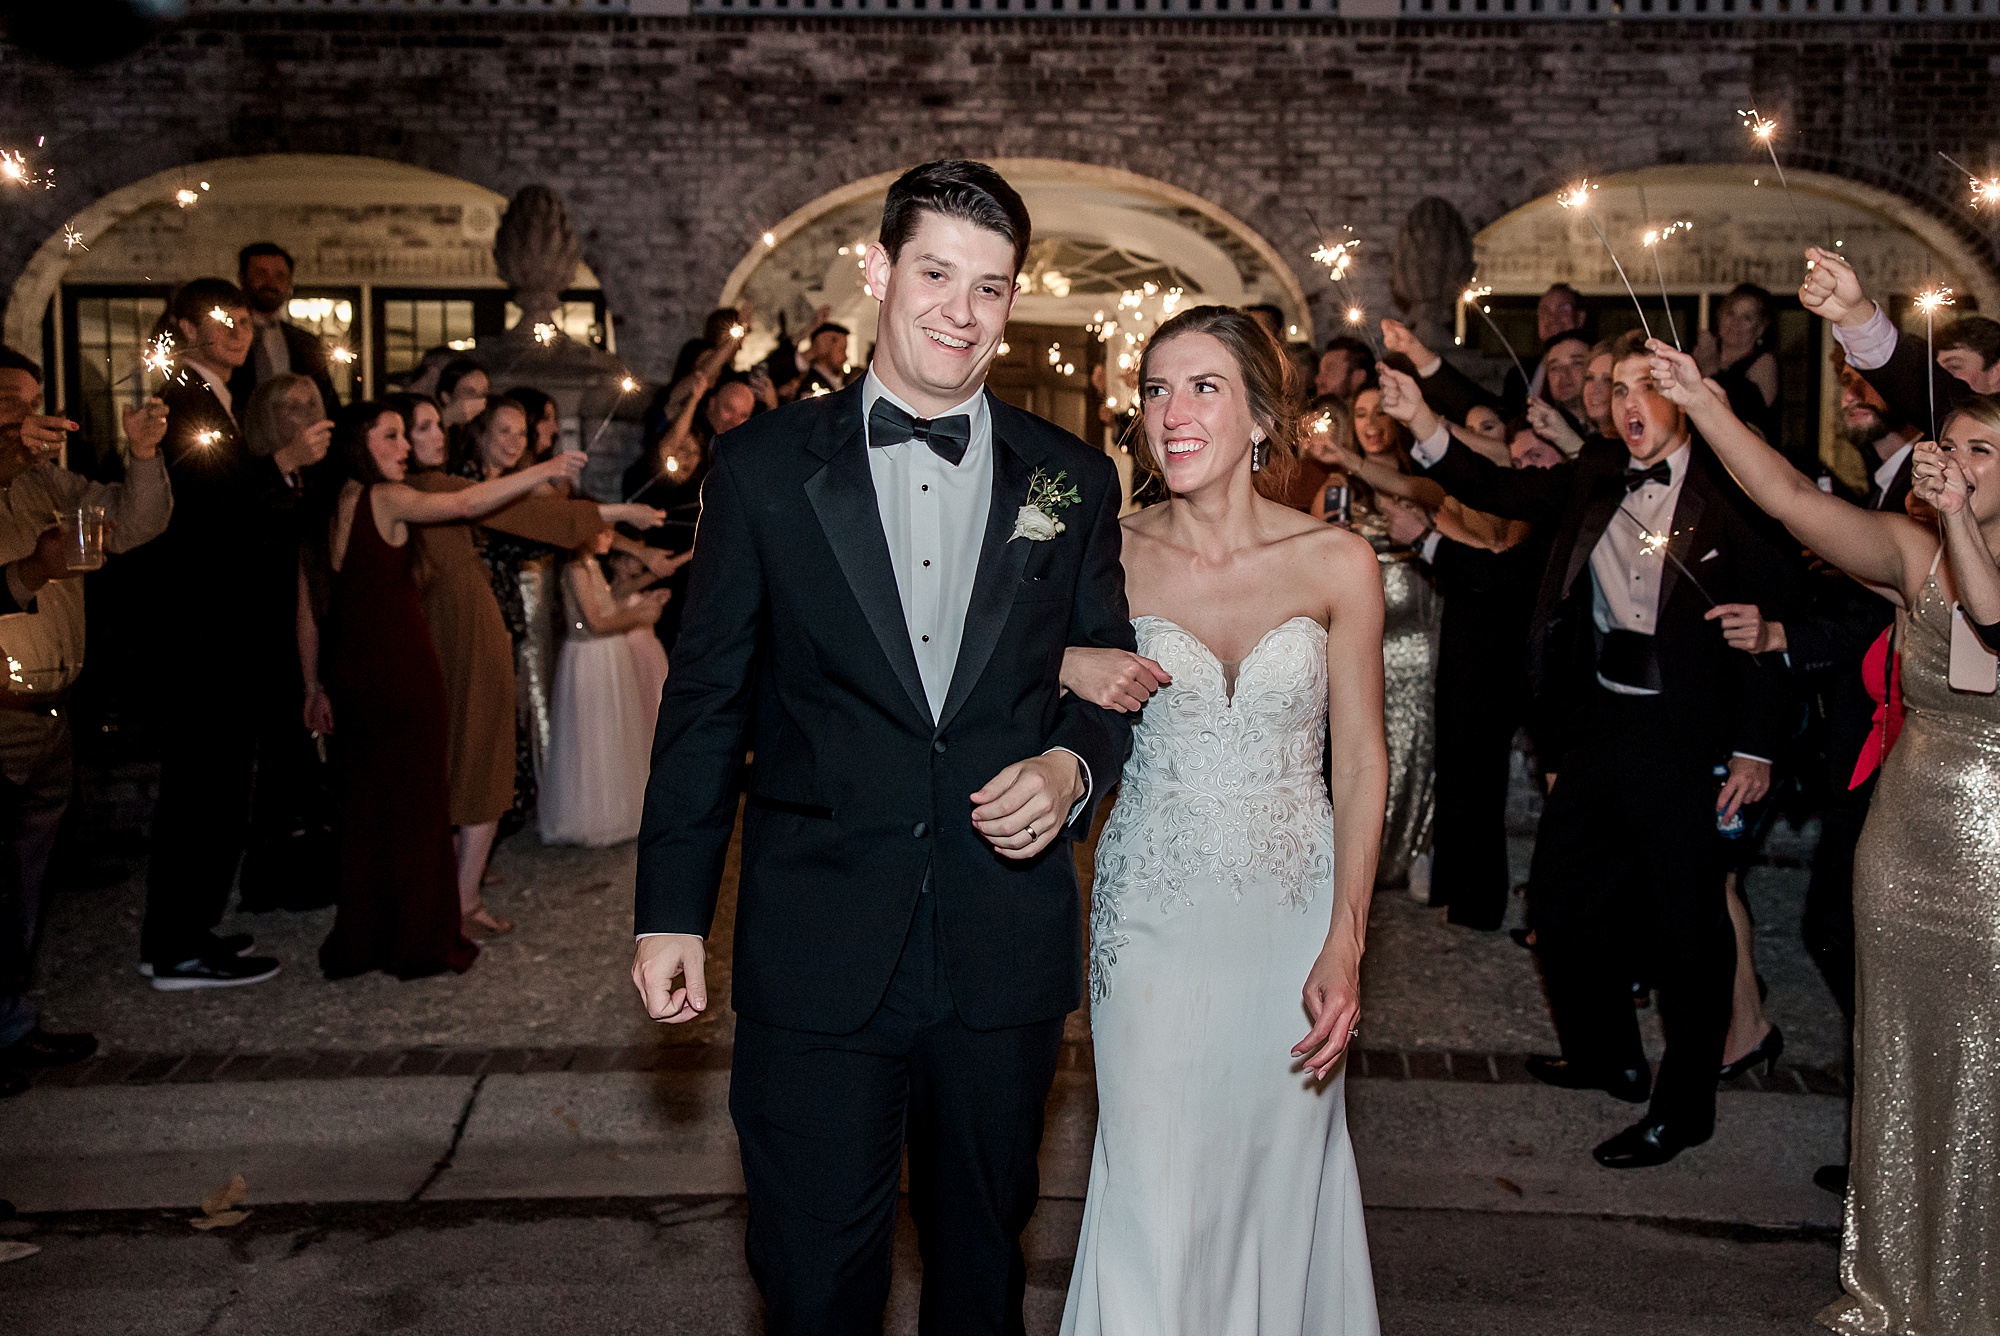 Bride and groom exit their Romantic South Carolina Wedding reception